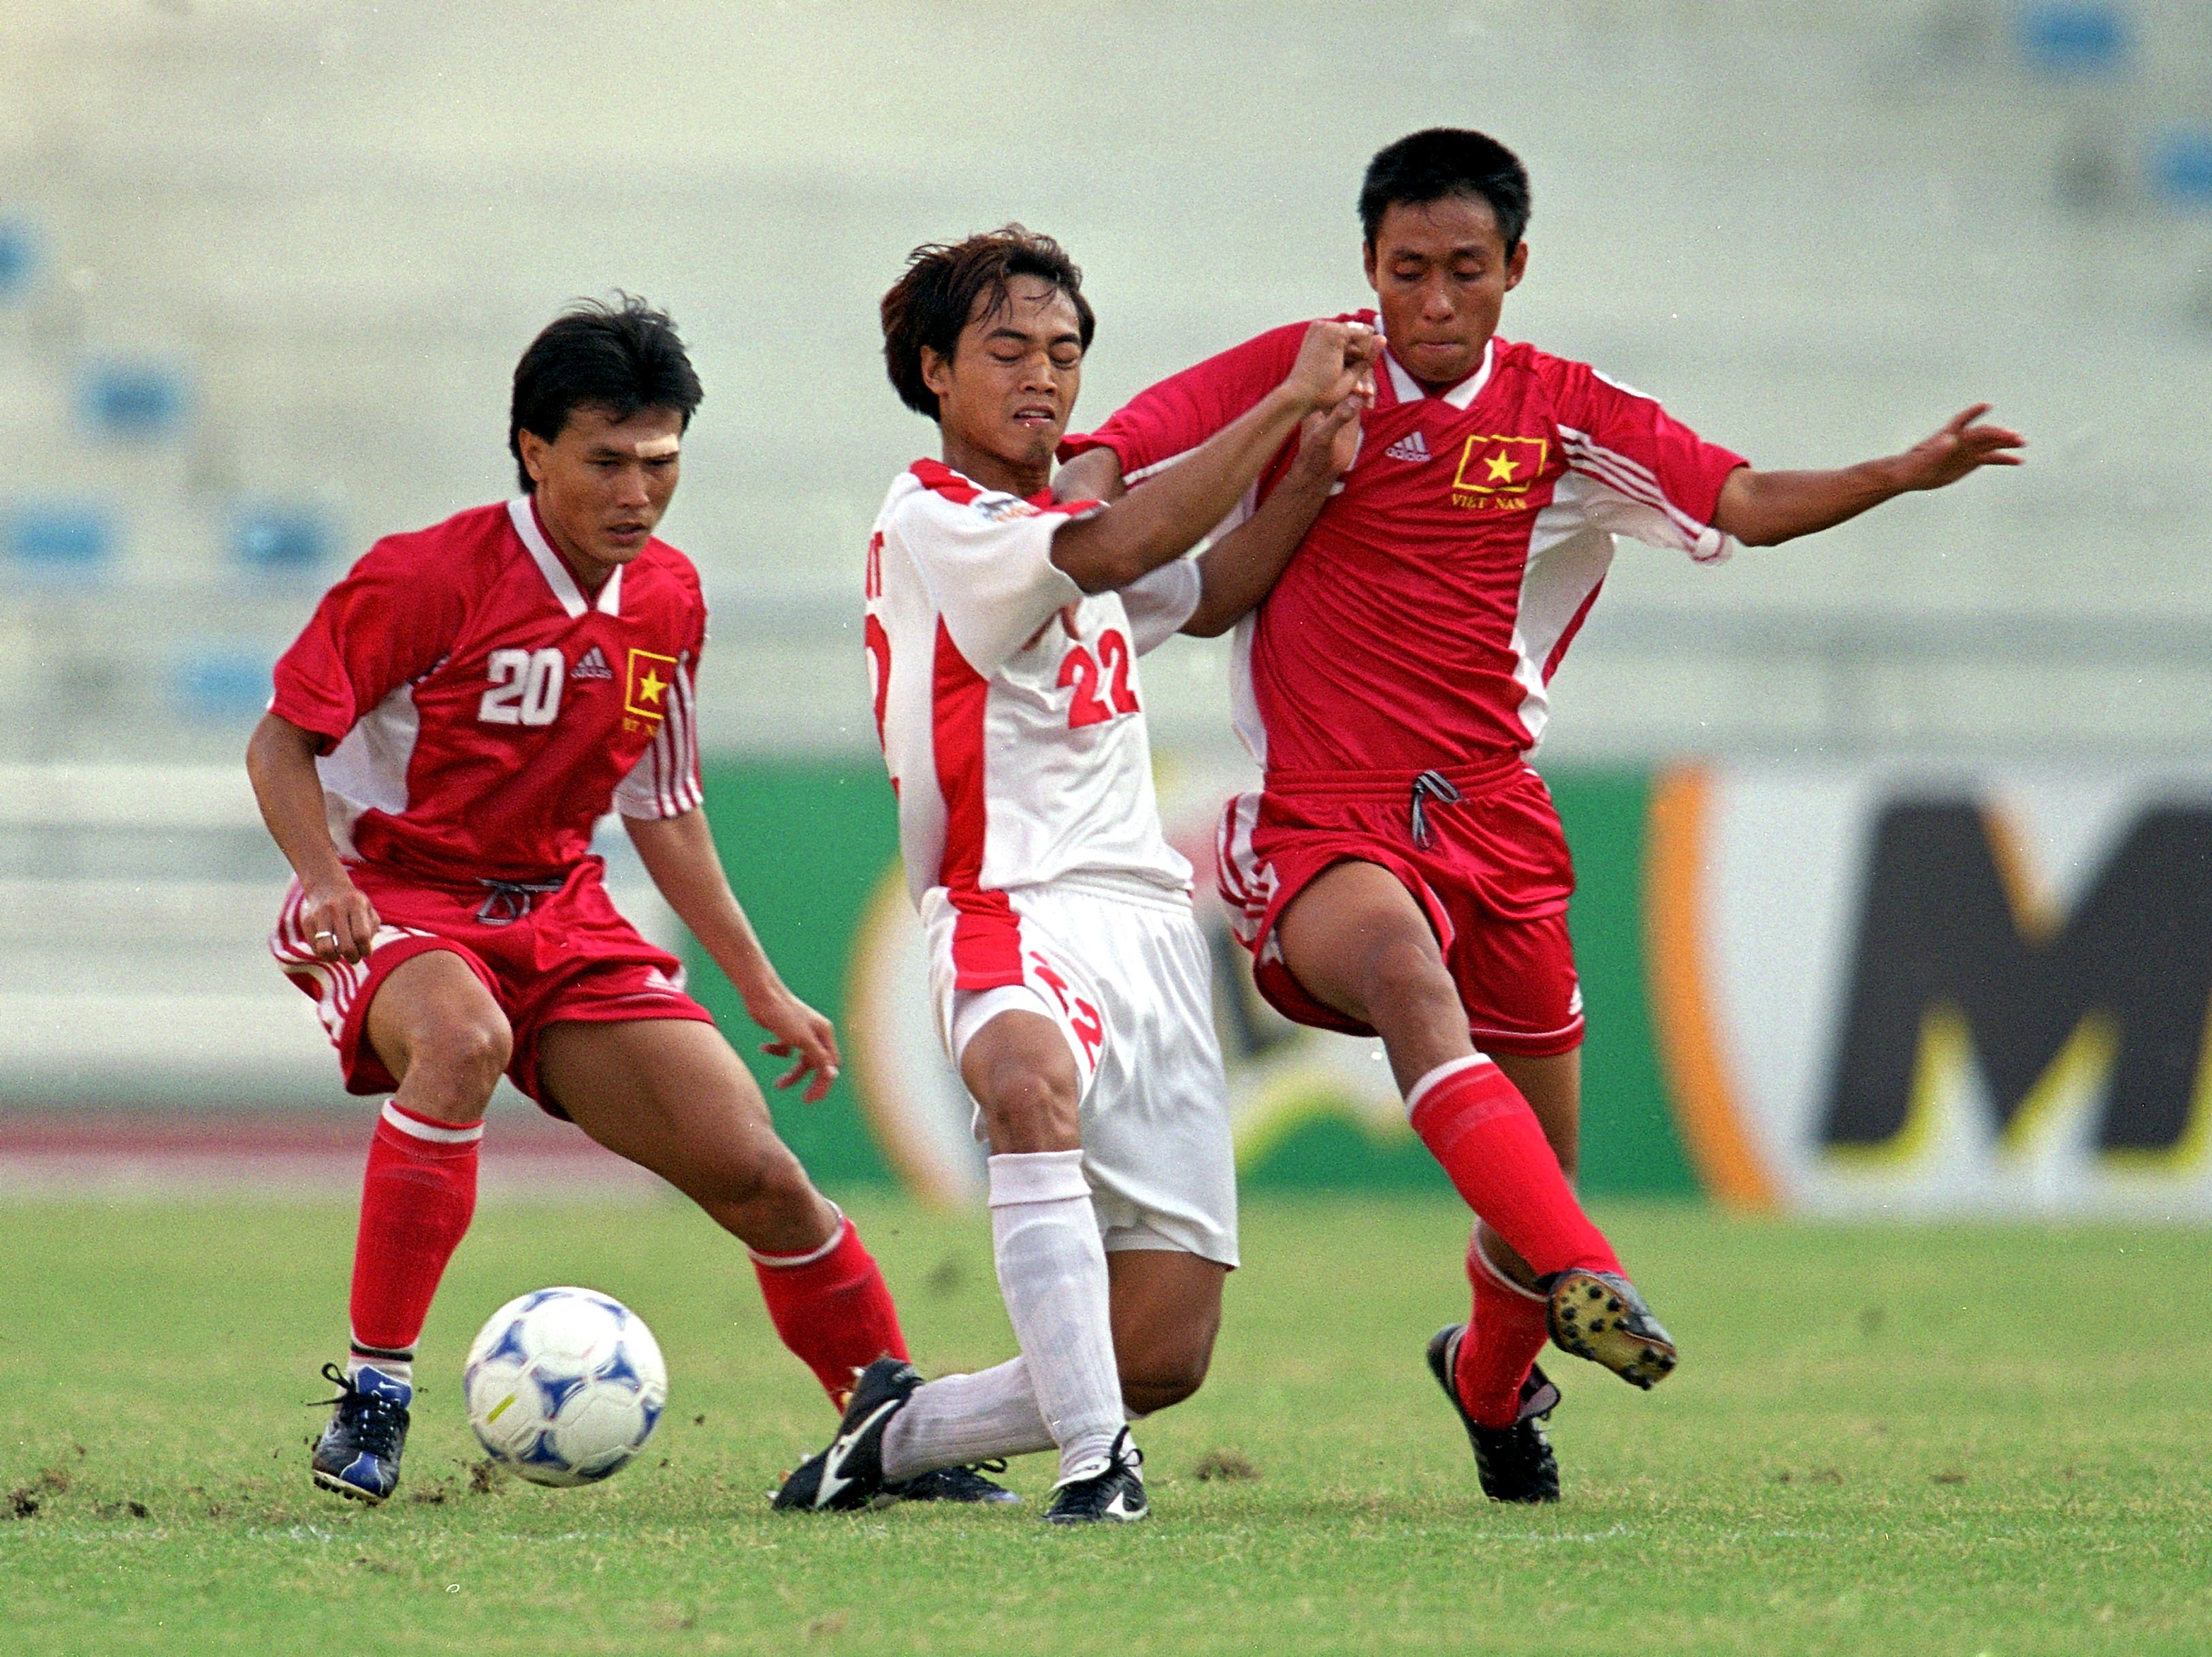 Sporting asia. Раджамангала. Футбол Таиланд и Индонезия в каких цветах майках.